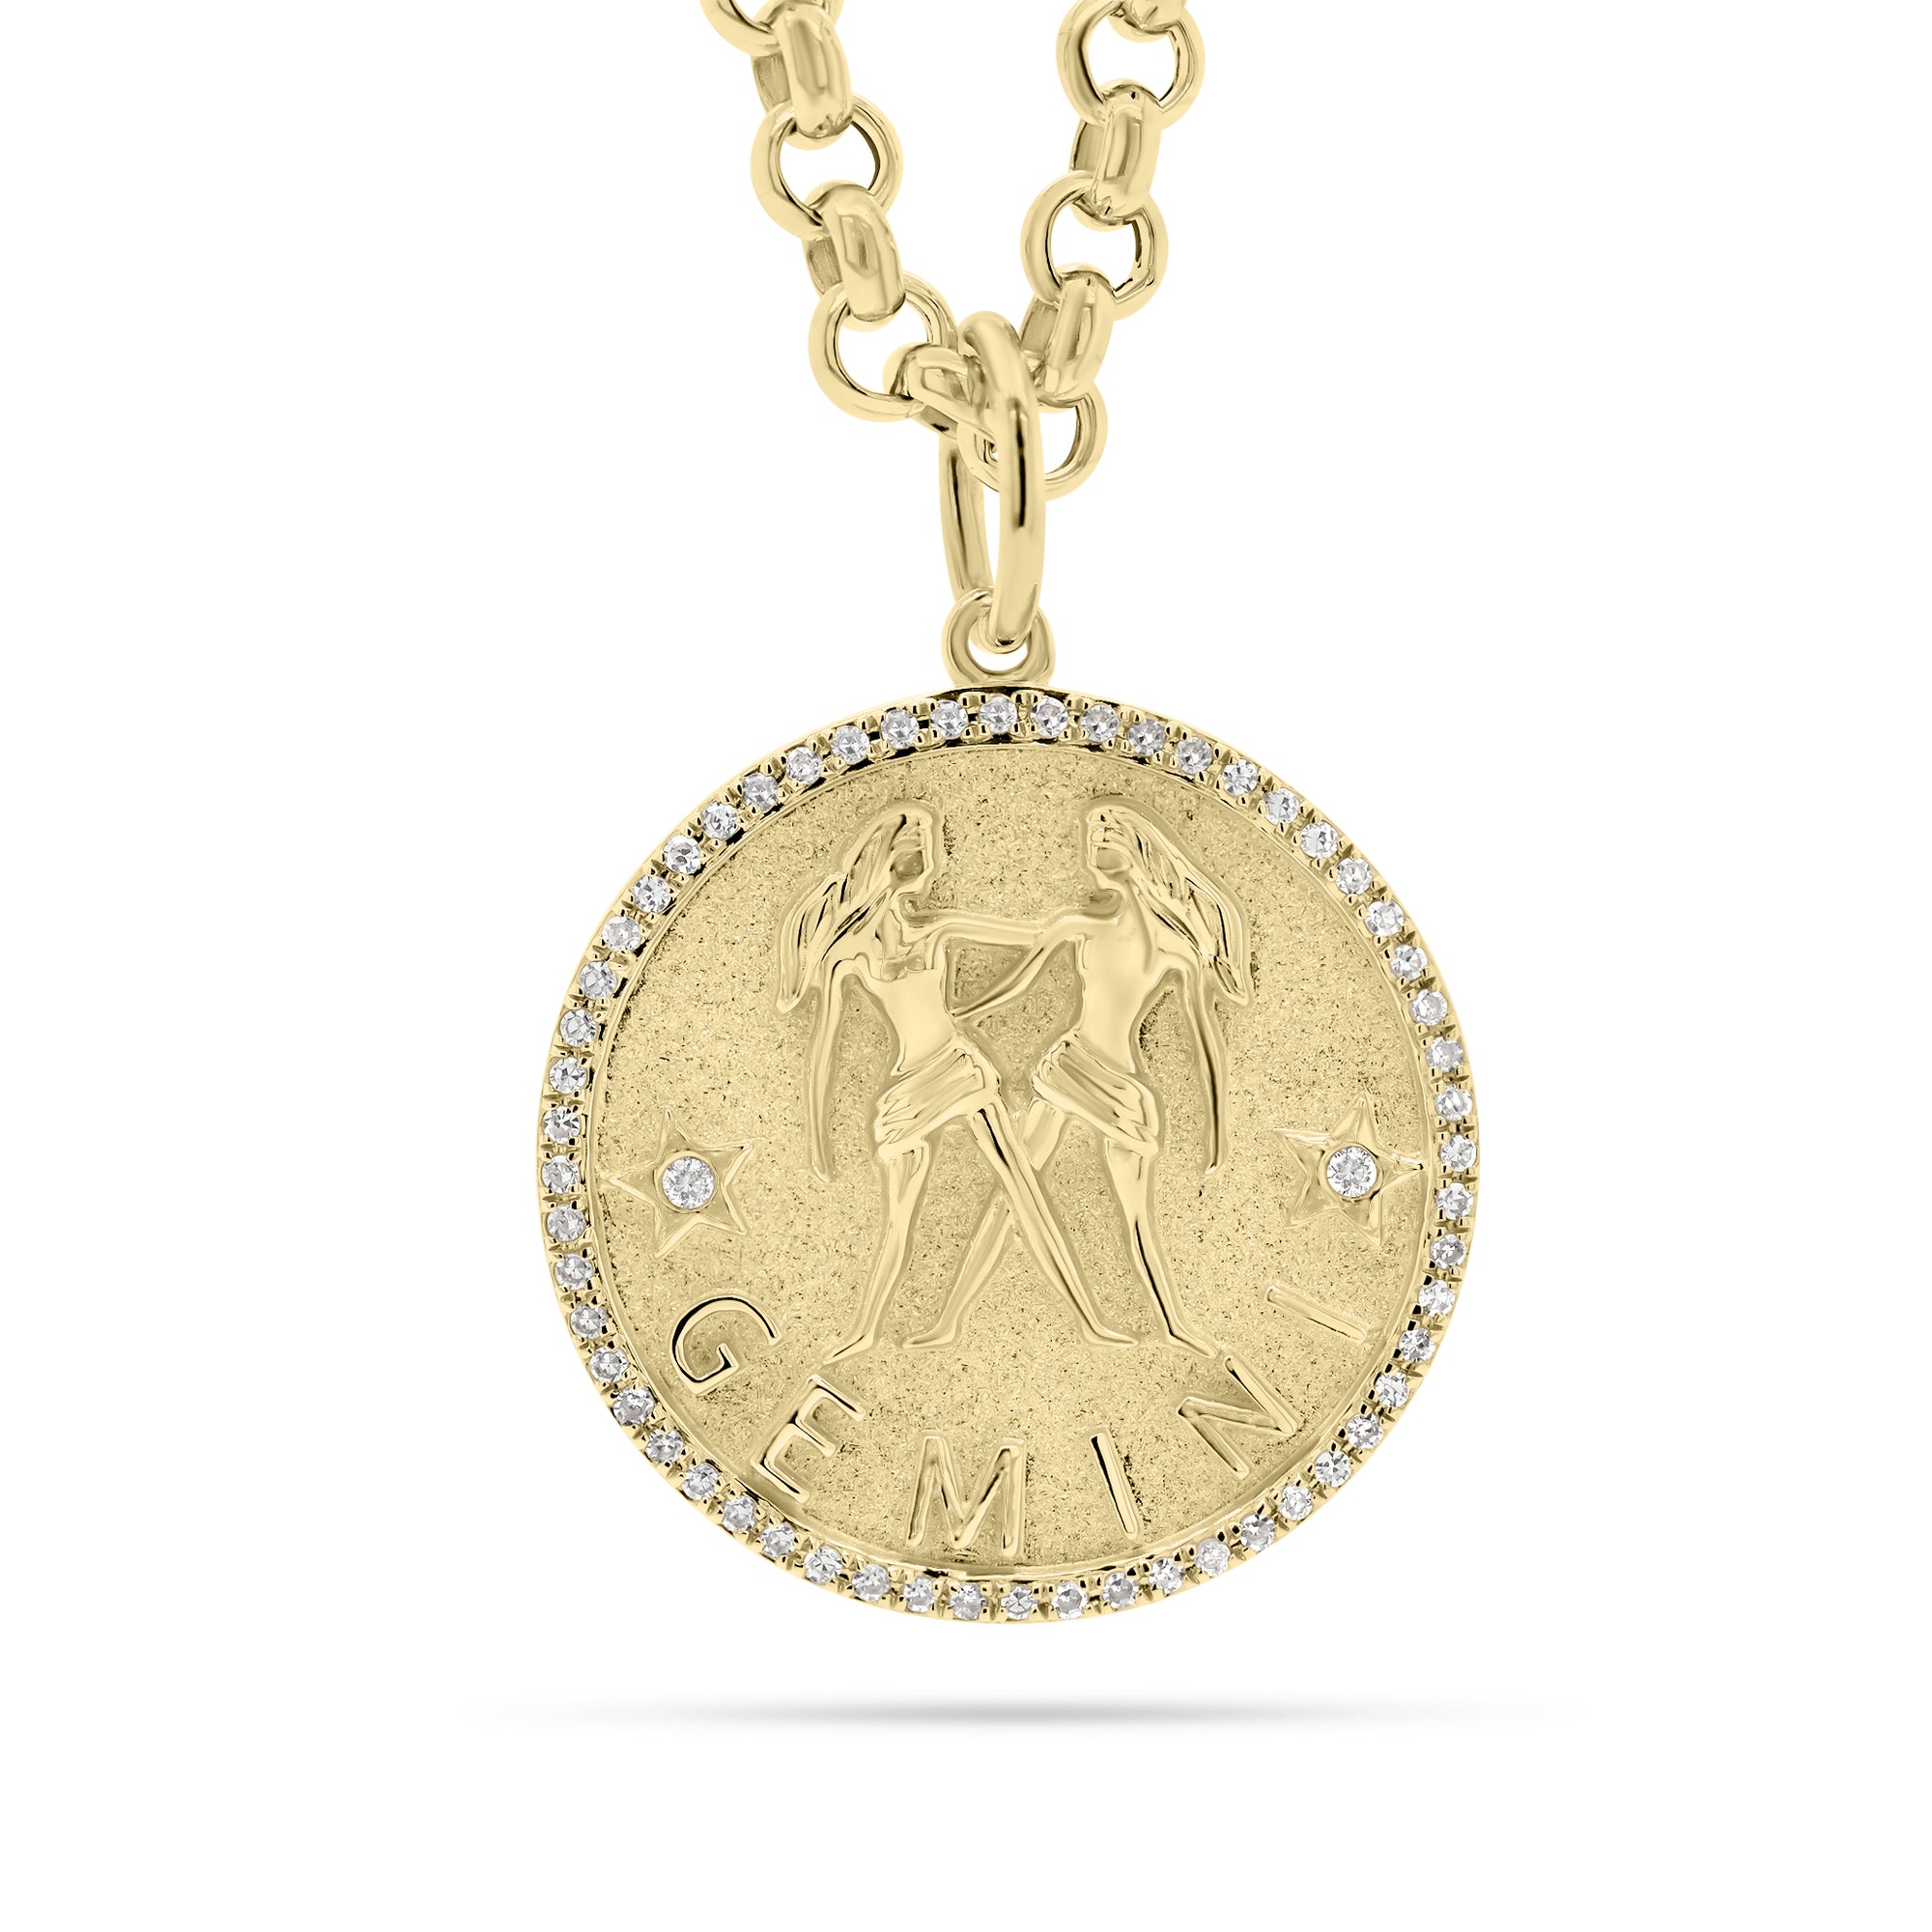 Diamond Zodiac Pendant - Gemini - 14K yellow gold weighing 4.25 grams  - 58 round diamonds totaling 0.16 carats